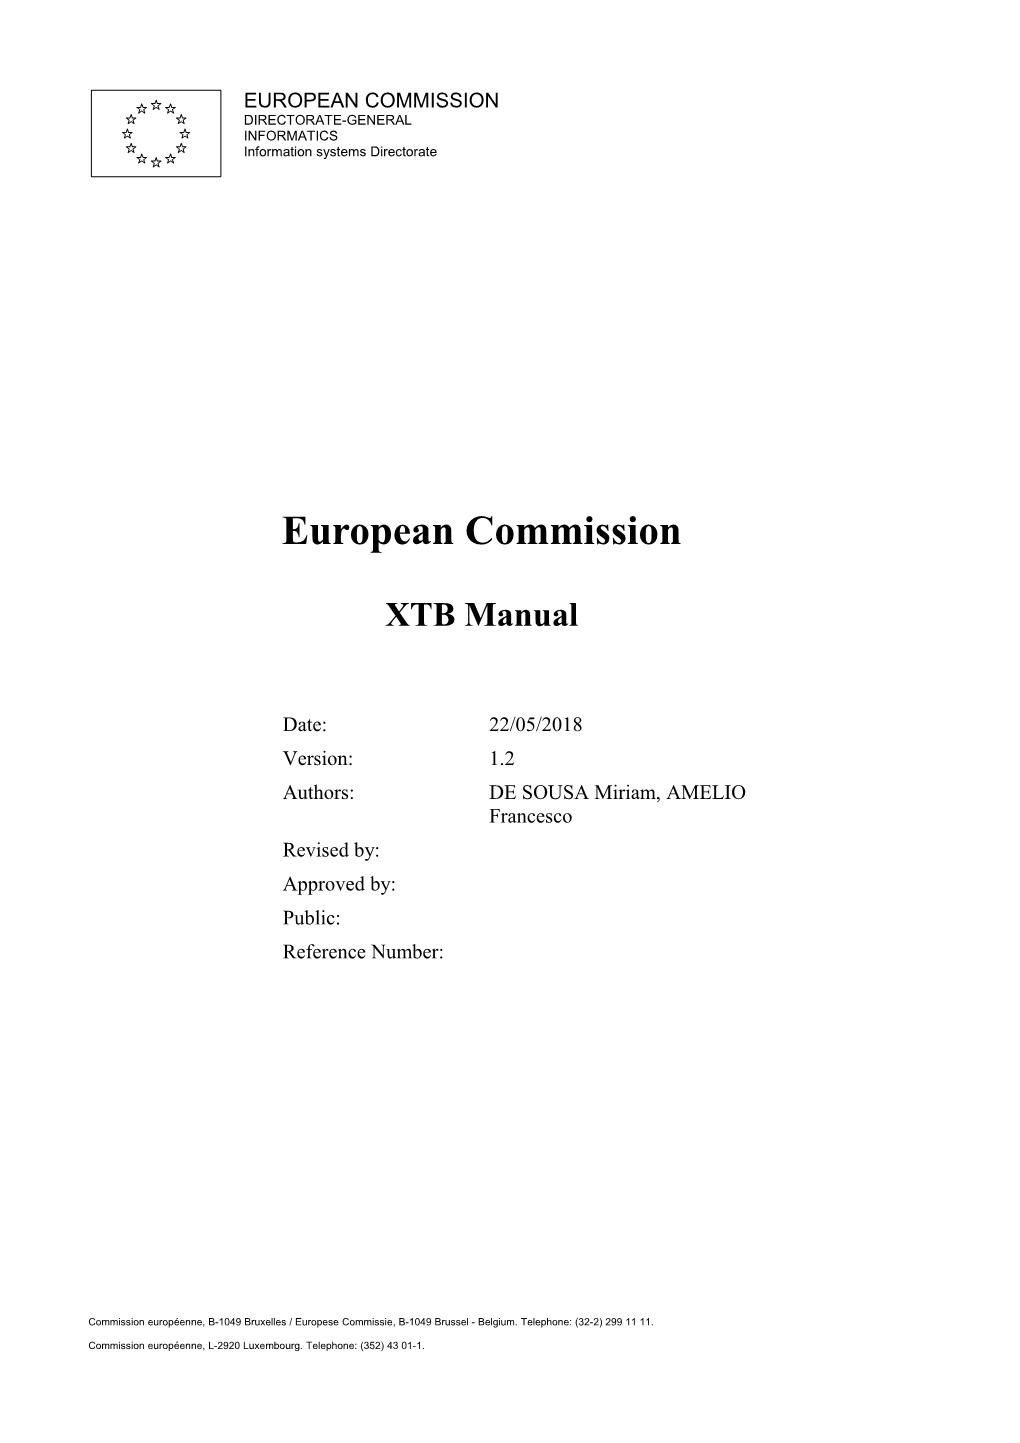 European Commission s7